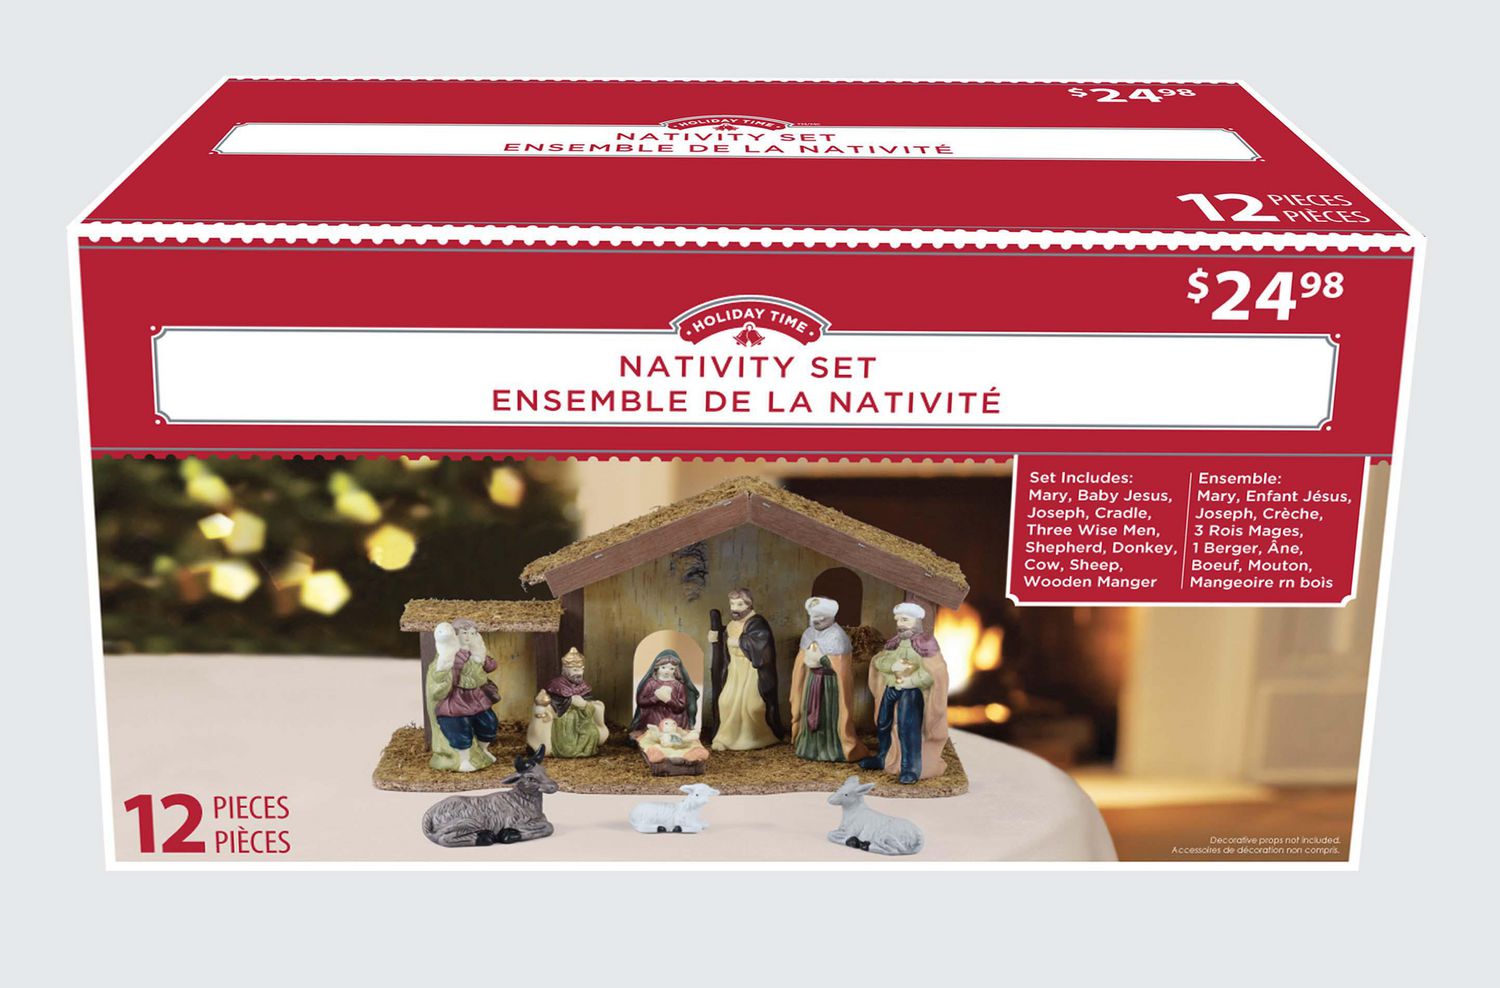 Holiday time 12 Pieces Nativity Set  Walmart Canada